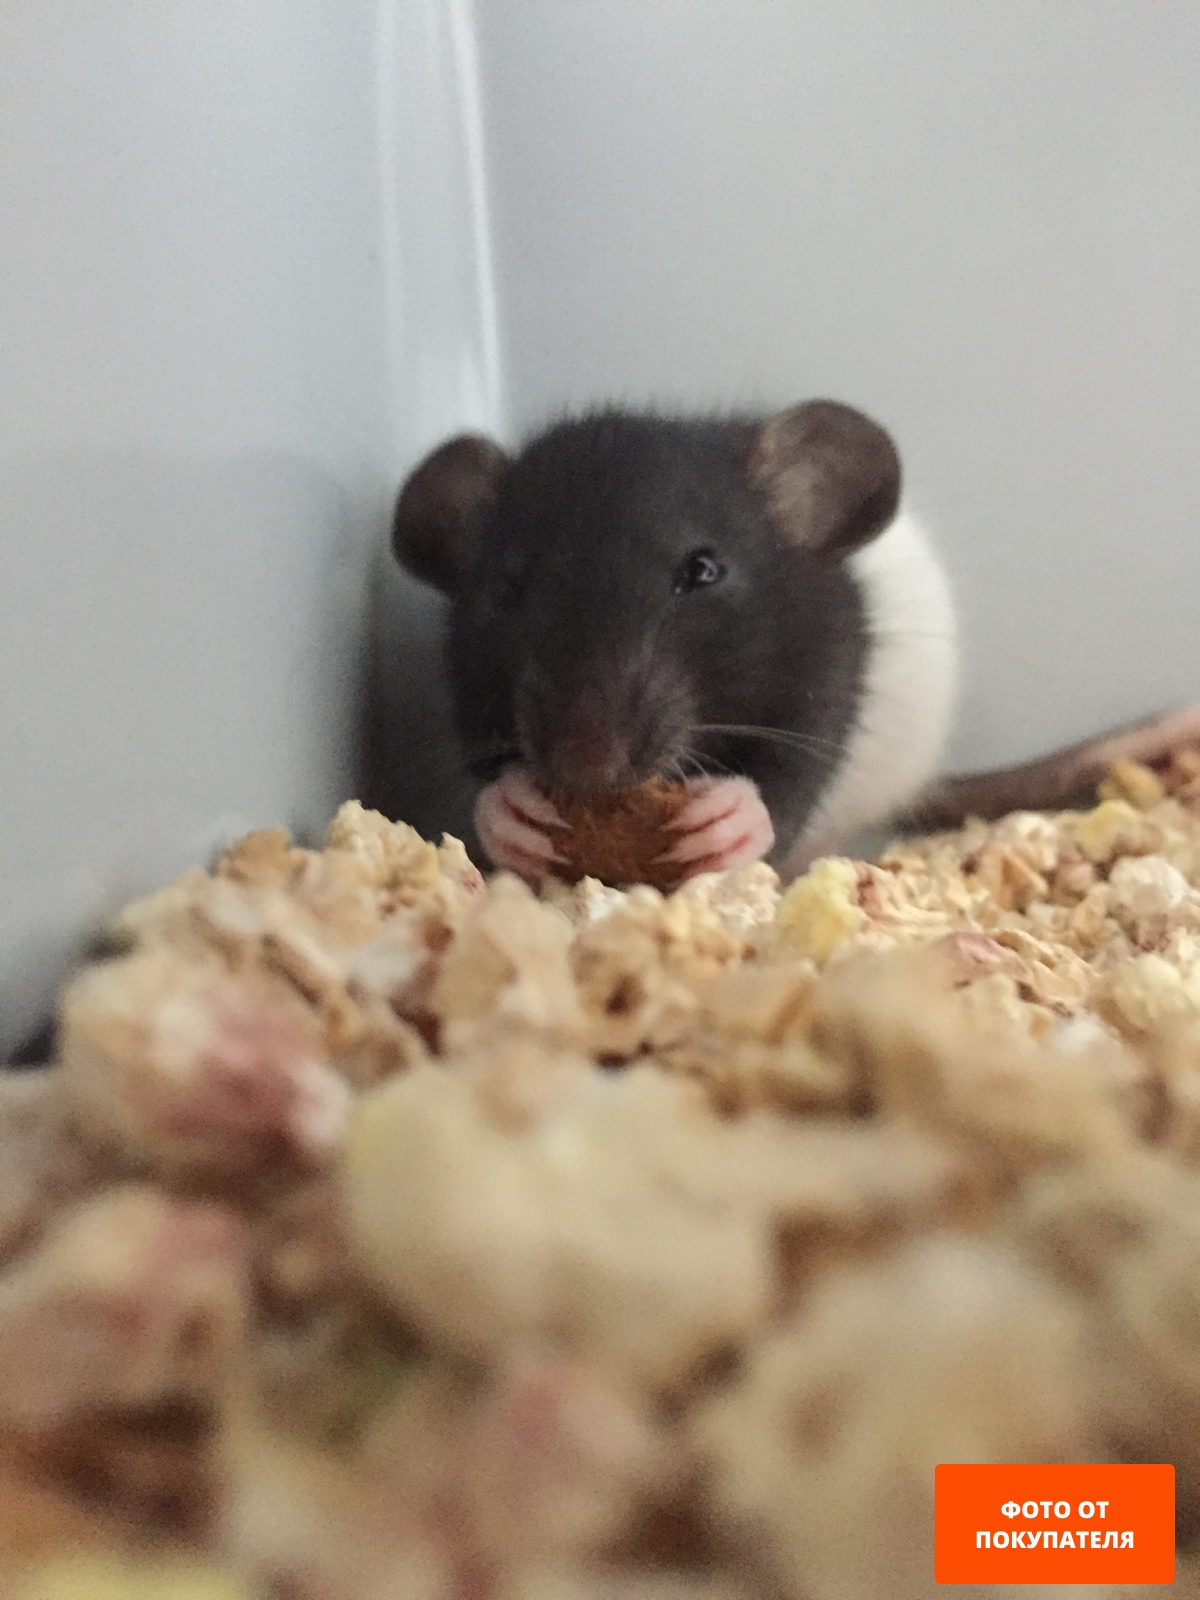 Корм для крыс и мышей VERSELE-LAGA Rat & Mouse Complete 0,5 кг (461298)